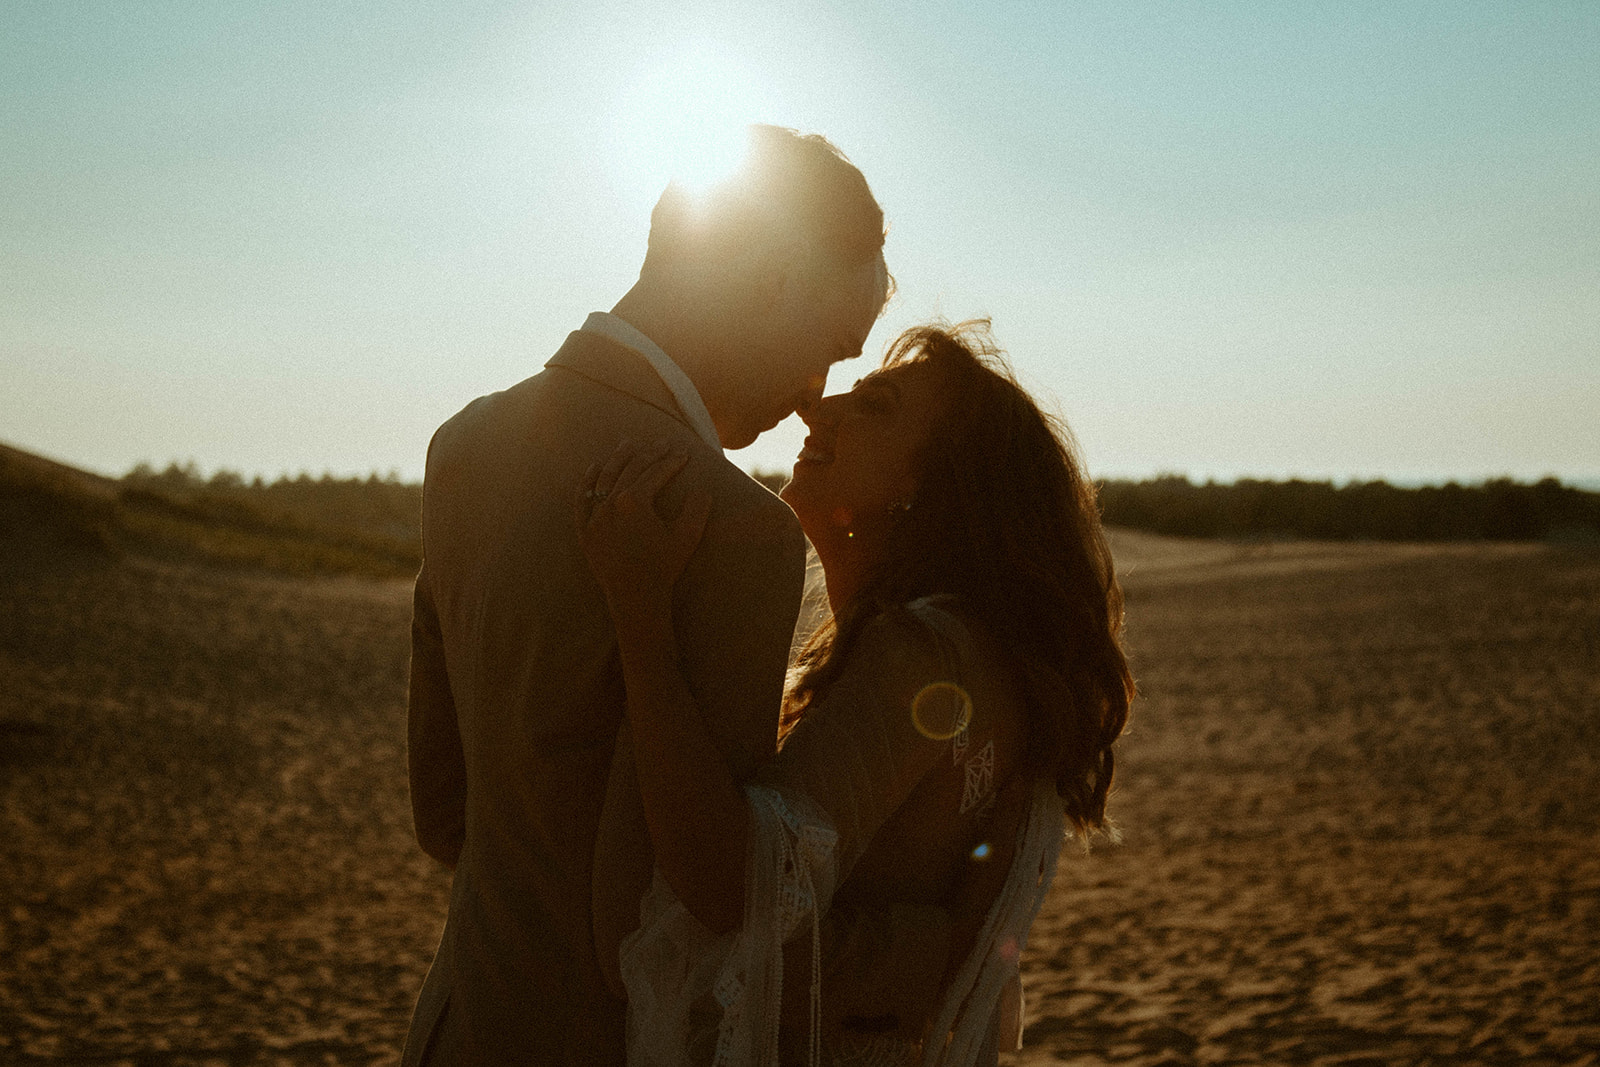 Couple who had bridal photos at the dunes share a kiss.